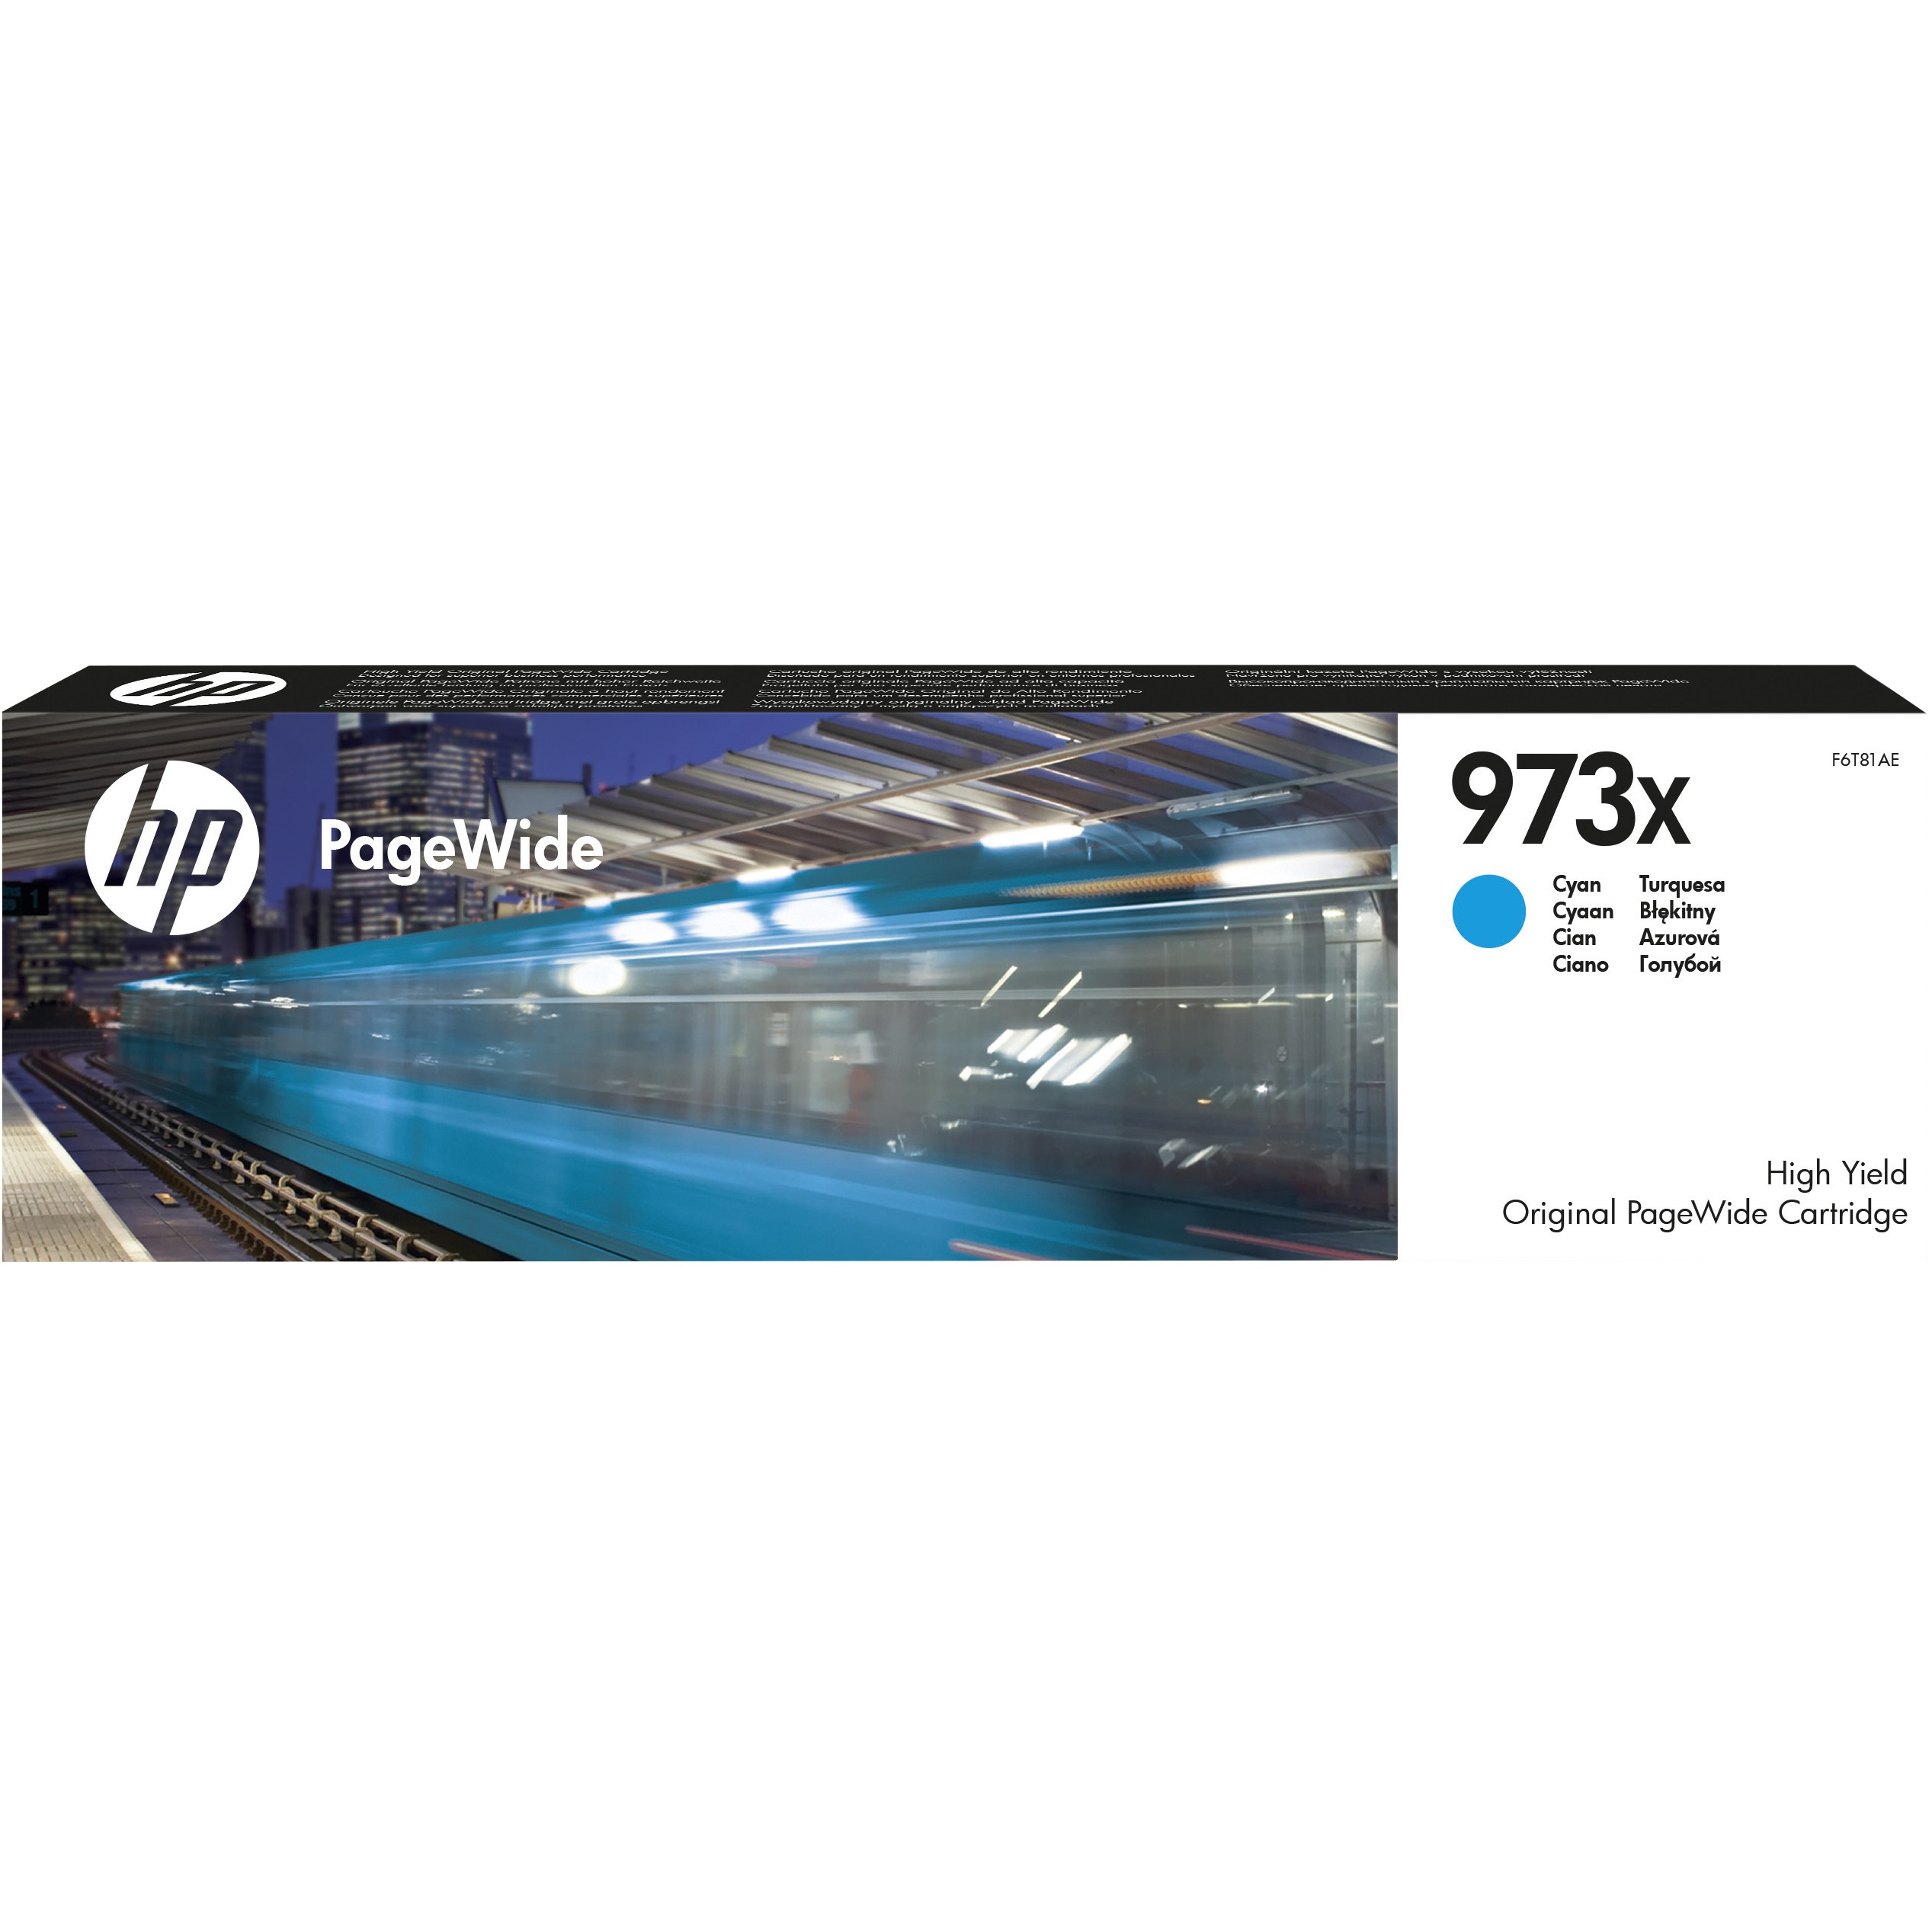 HP 973X High Yield Cyan Original PageWide Cartridge ink cartridge